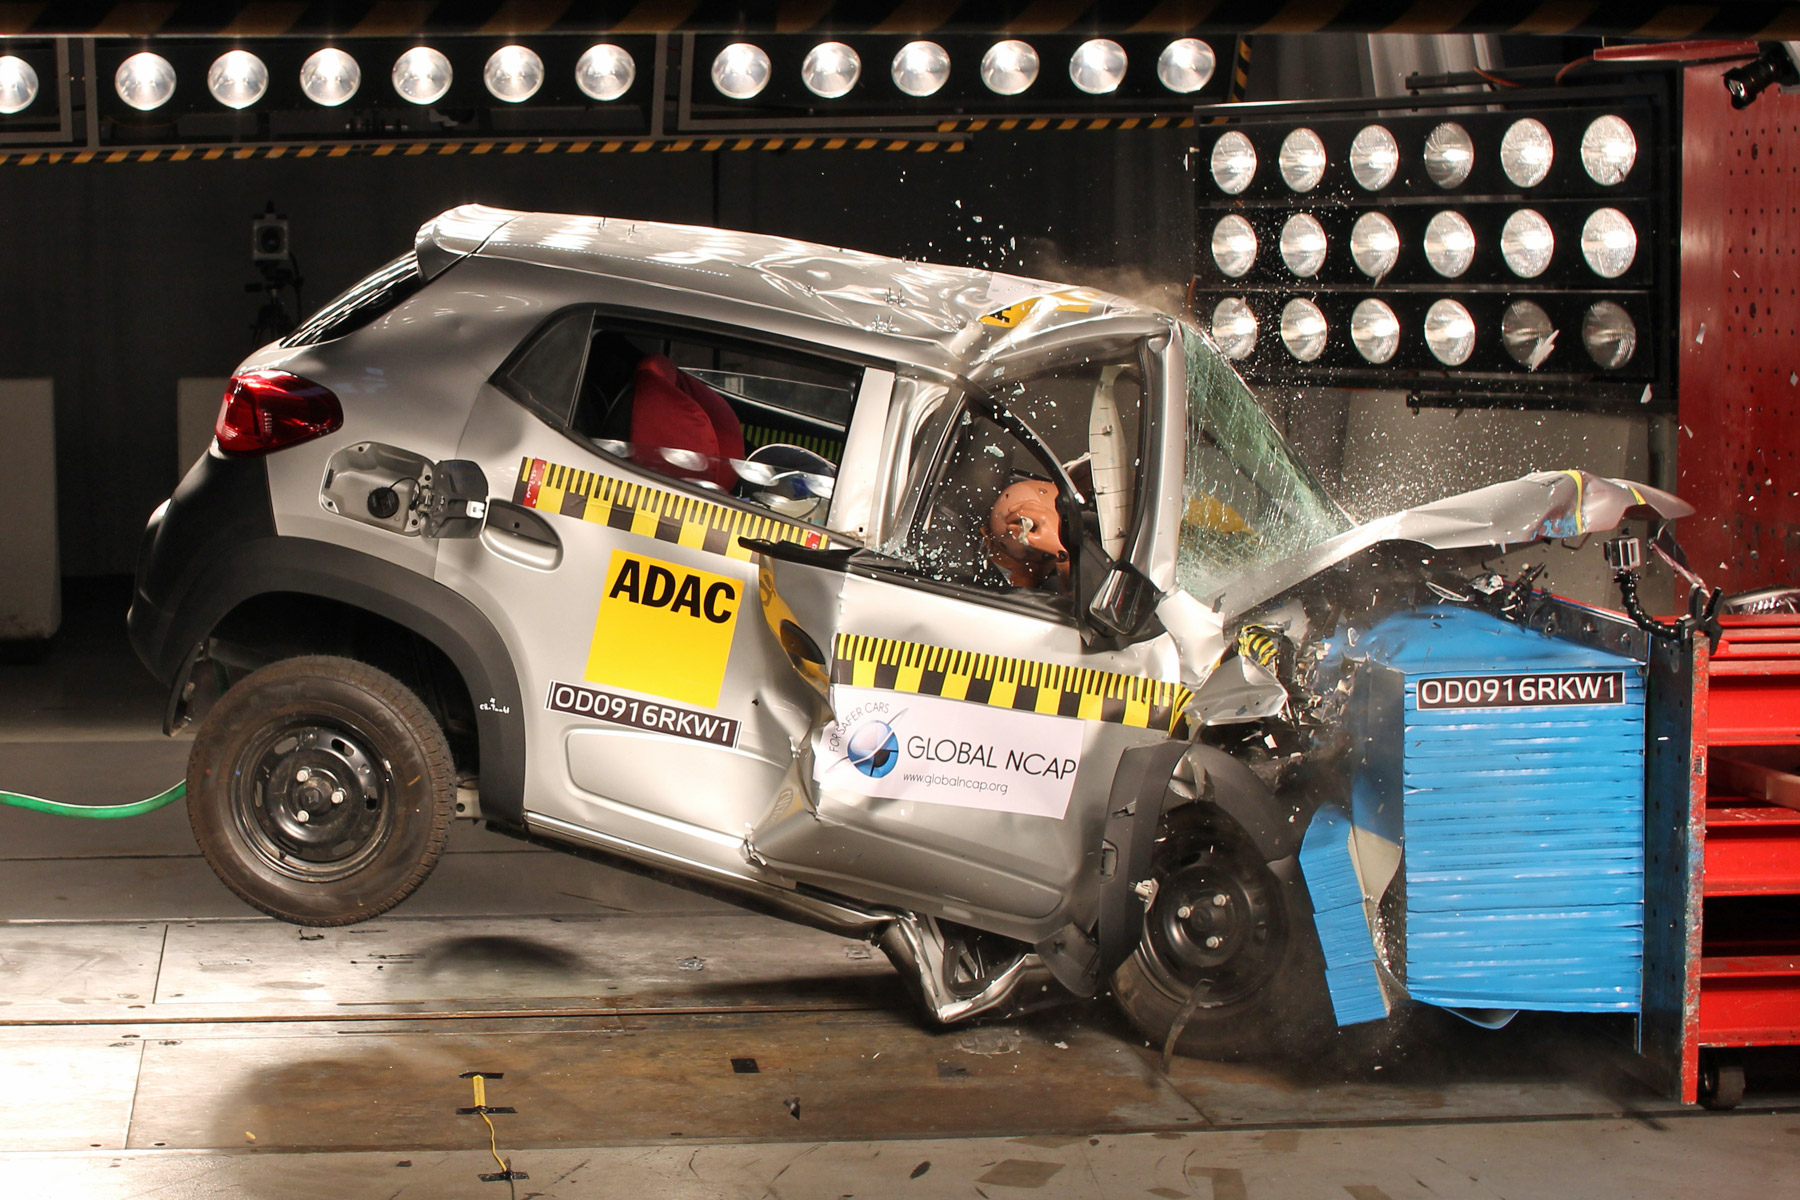 Indian cars achieve ZERO stars in latest Global NCAP crash tests